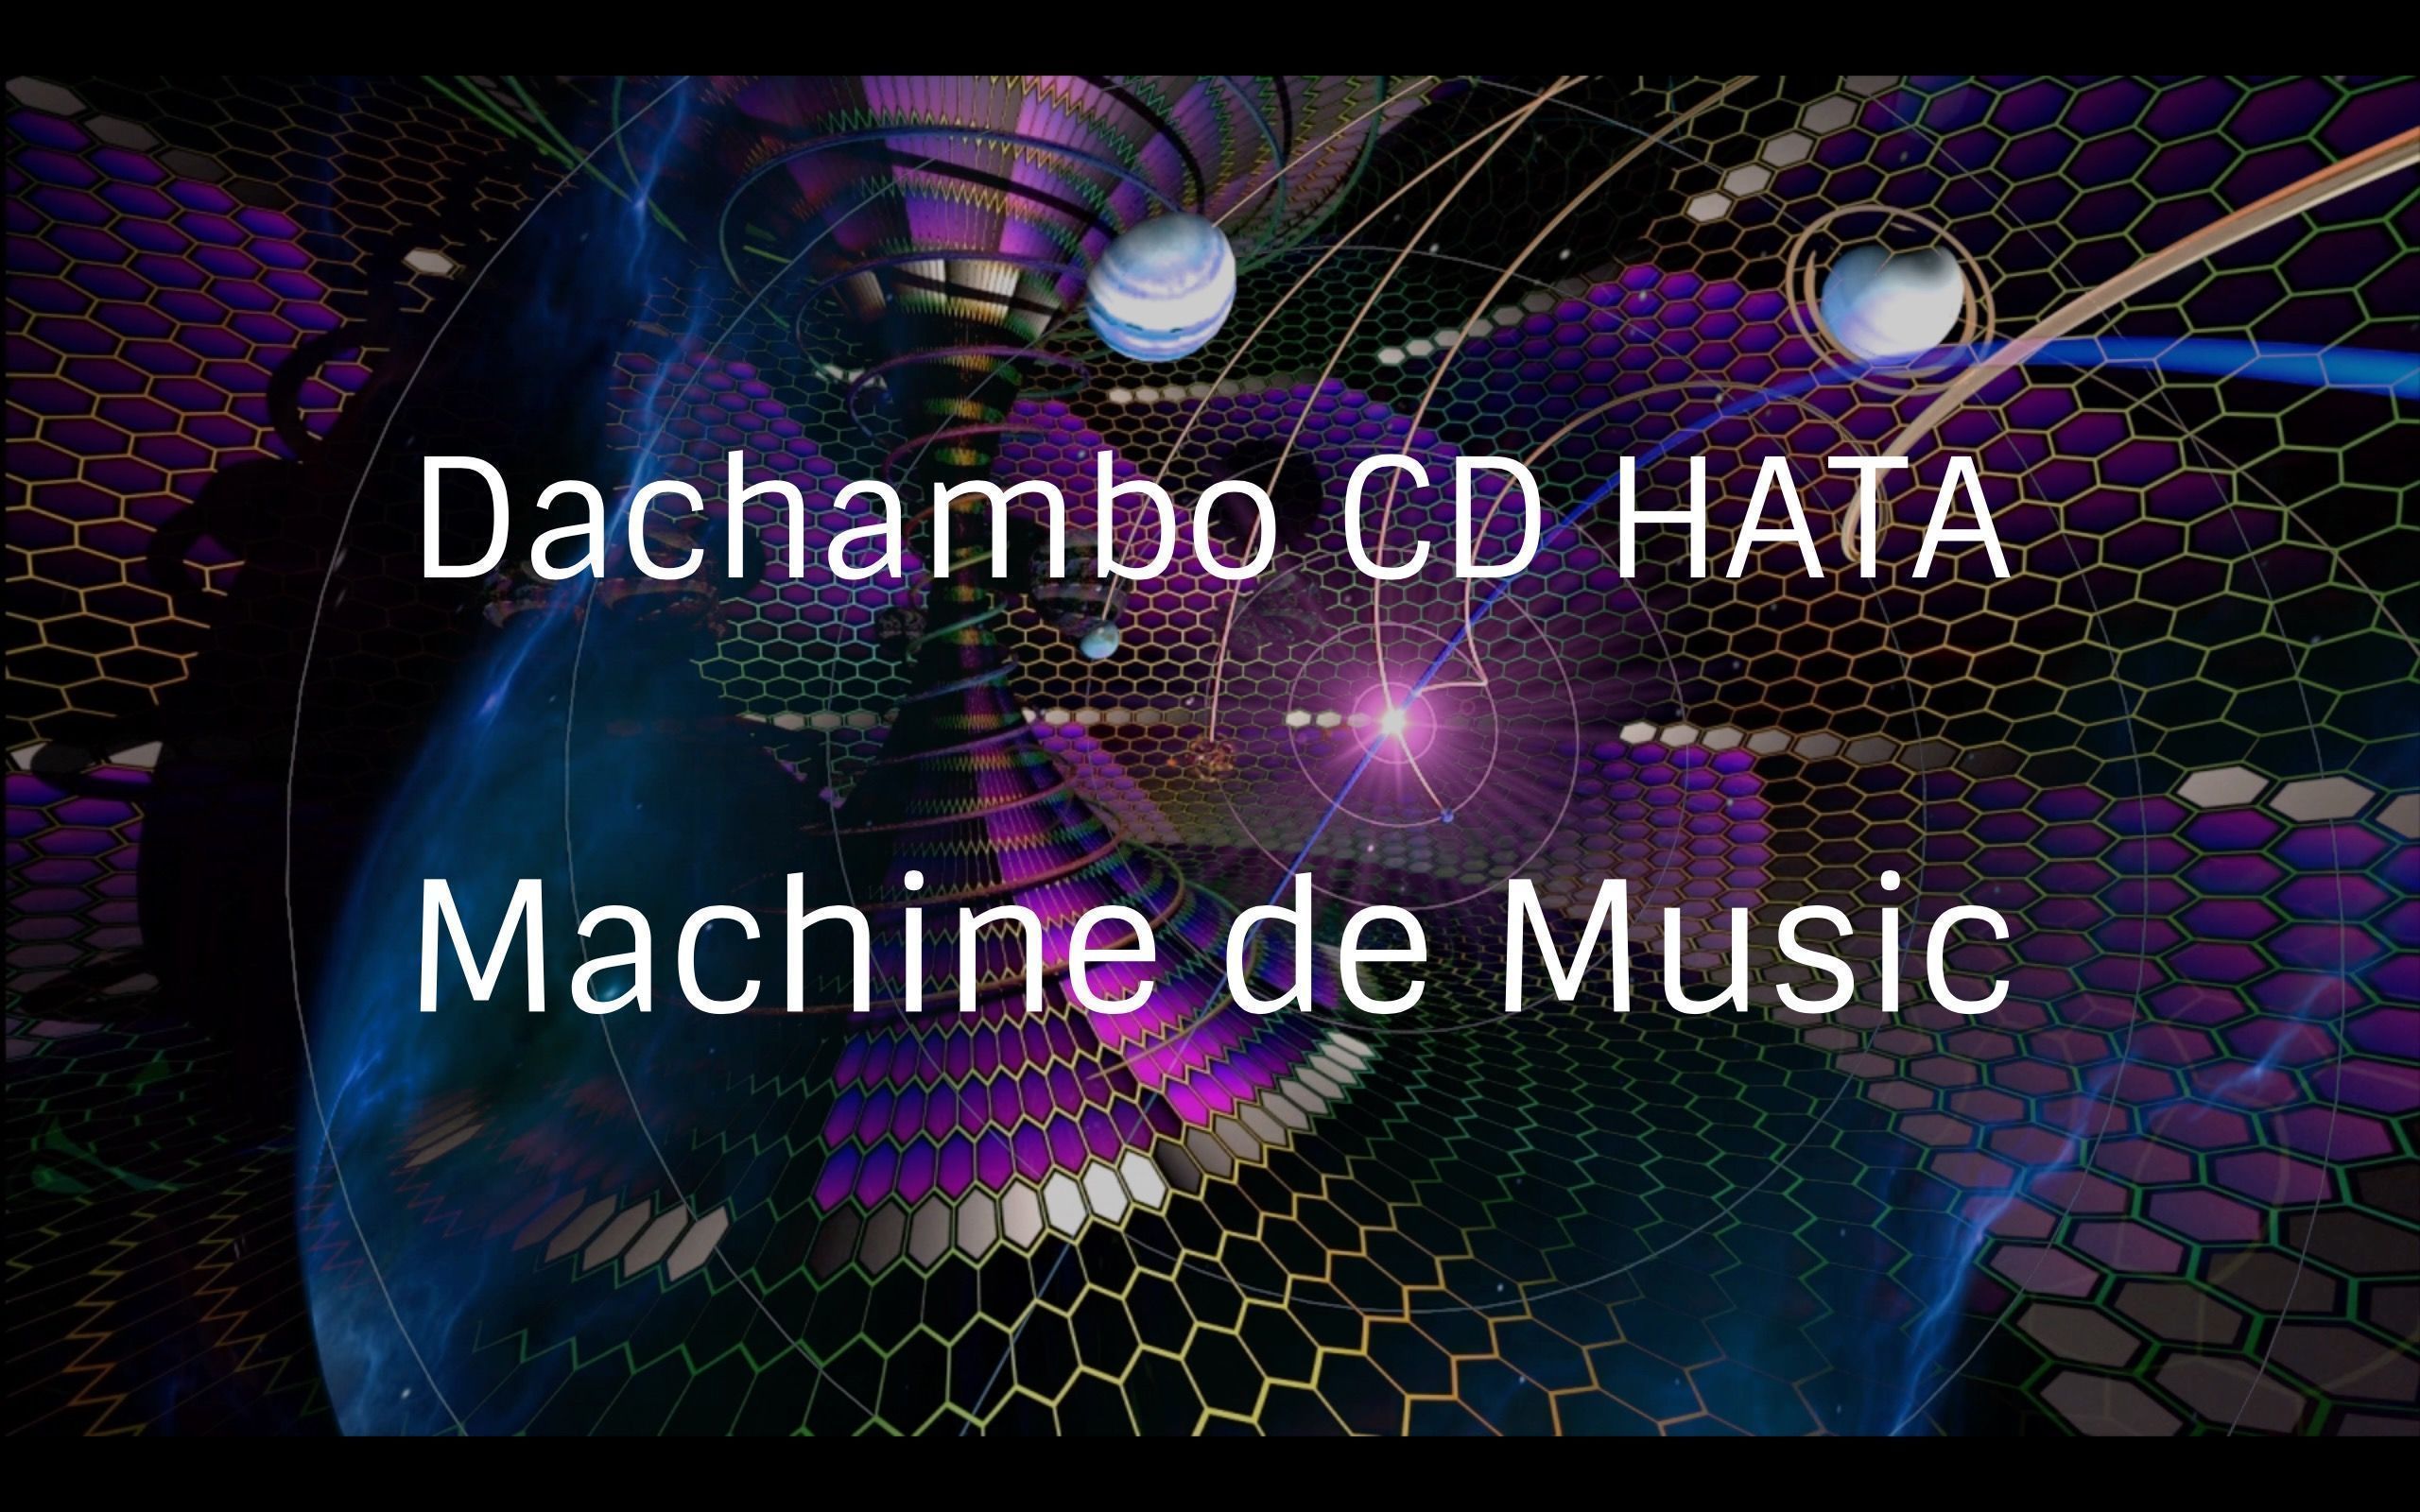 Dachambo CD HATAのMachine de Music コラムVol.63 LADER PRODUCTION スタジオ Field Trip

